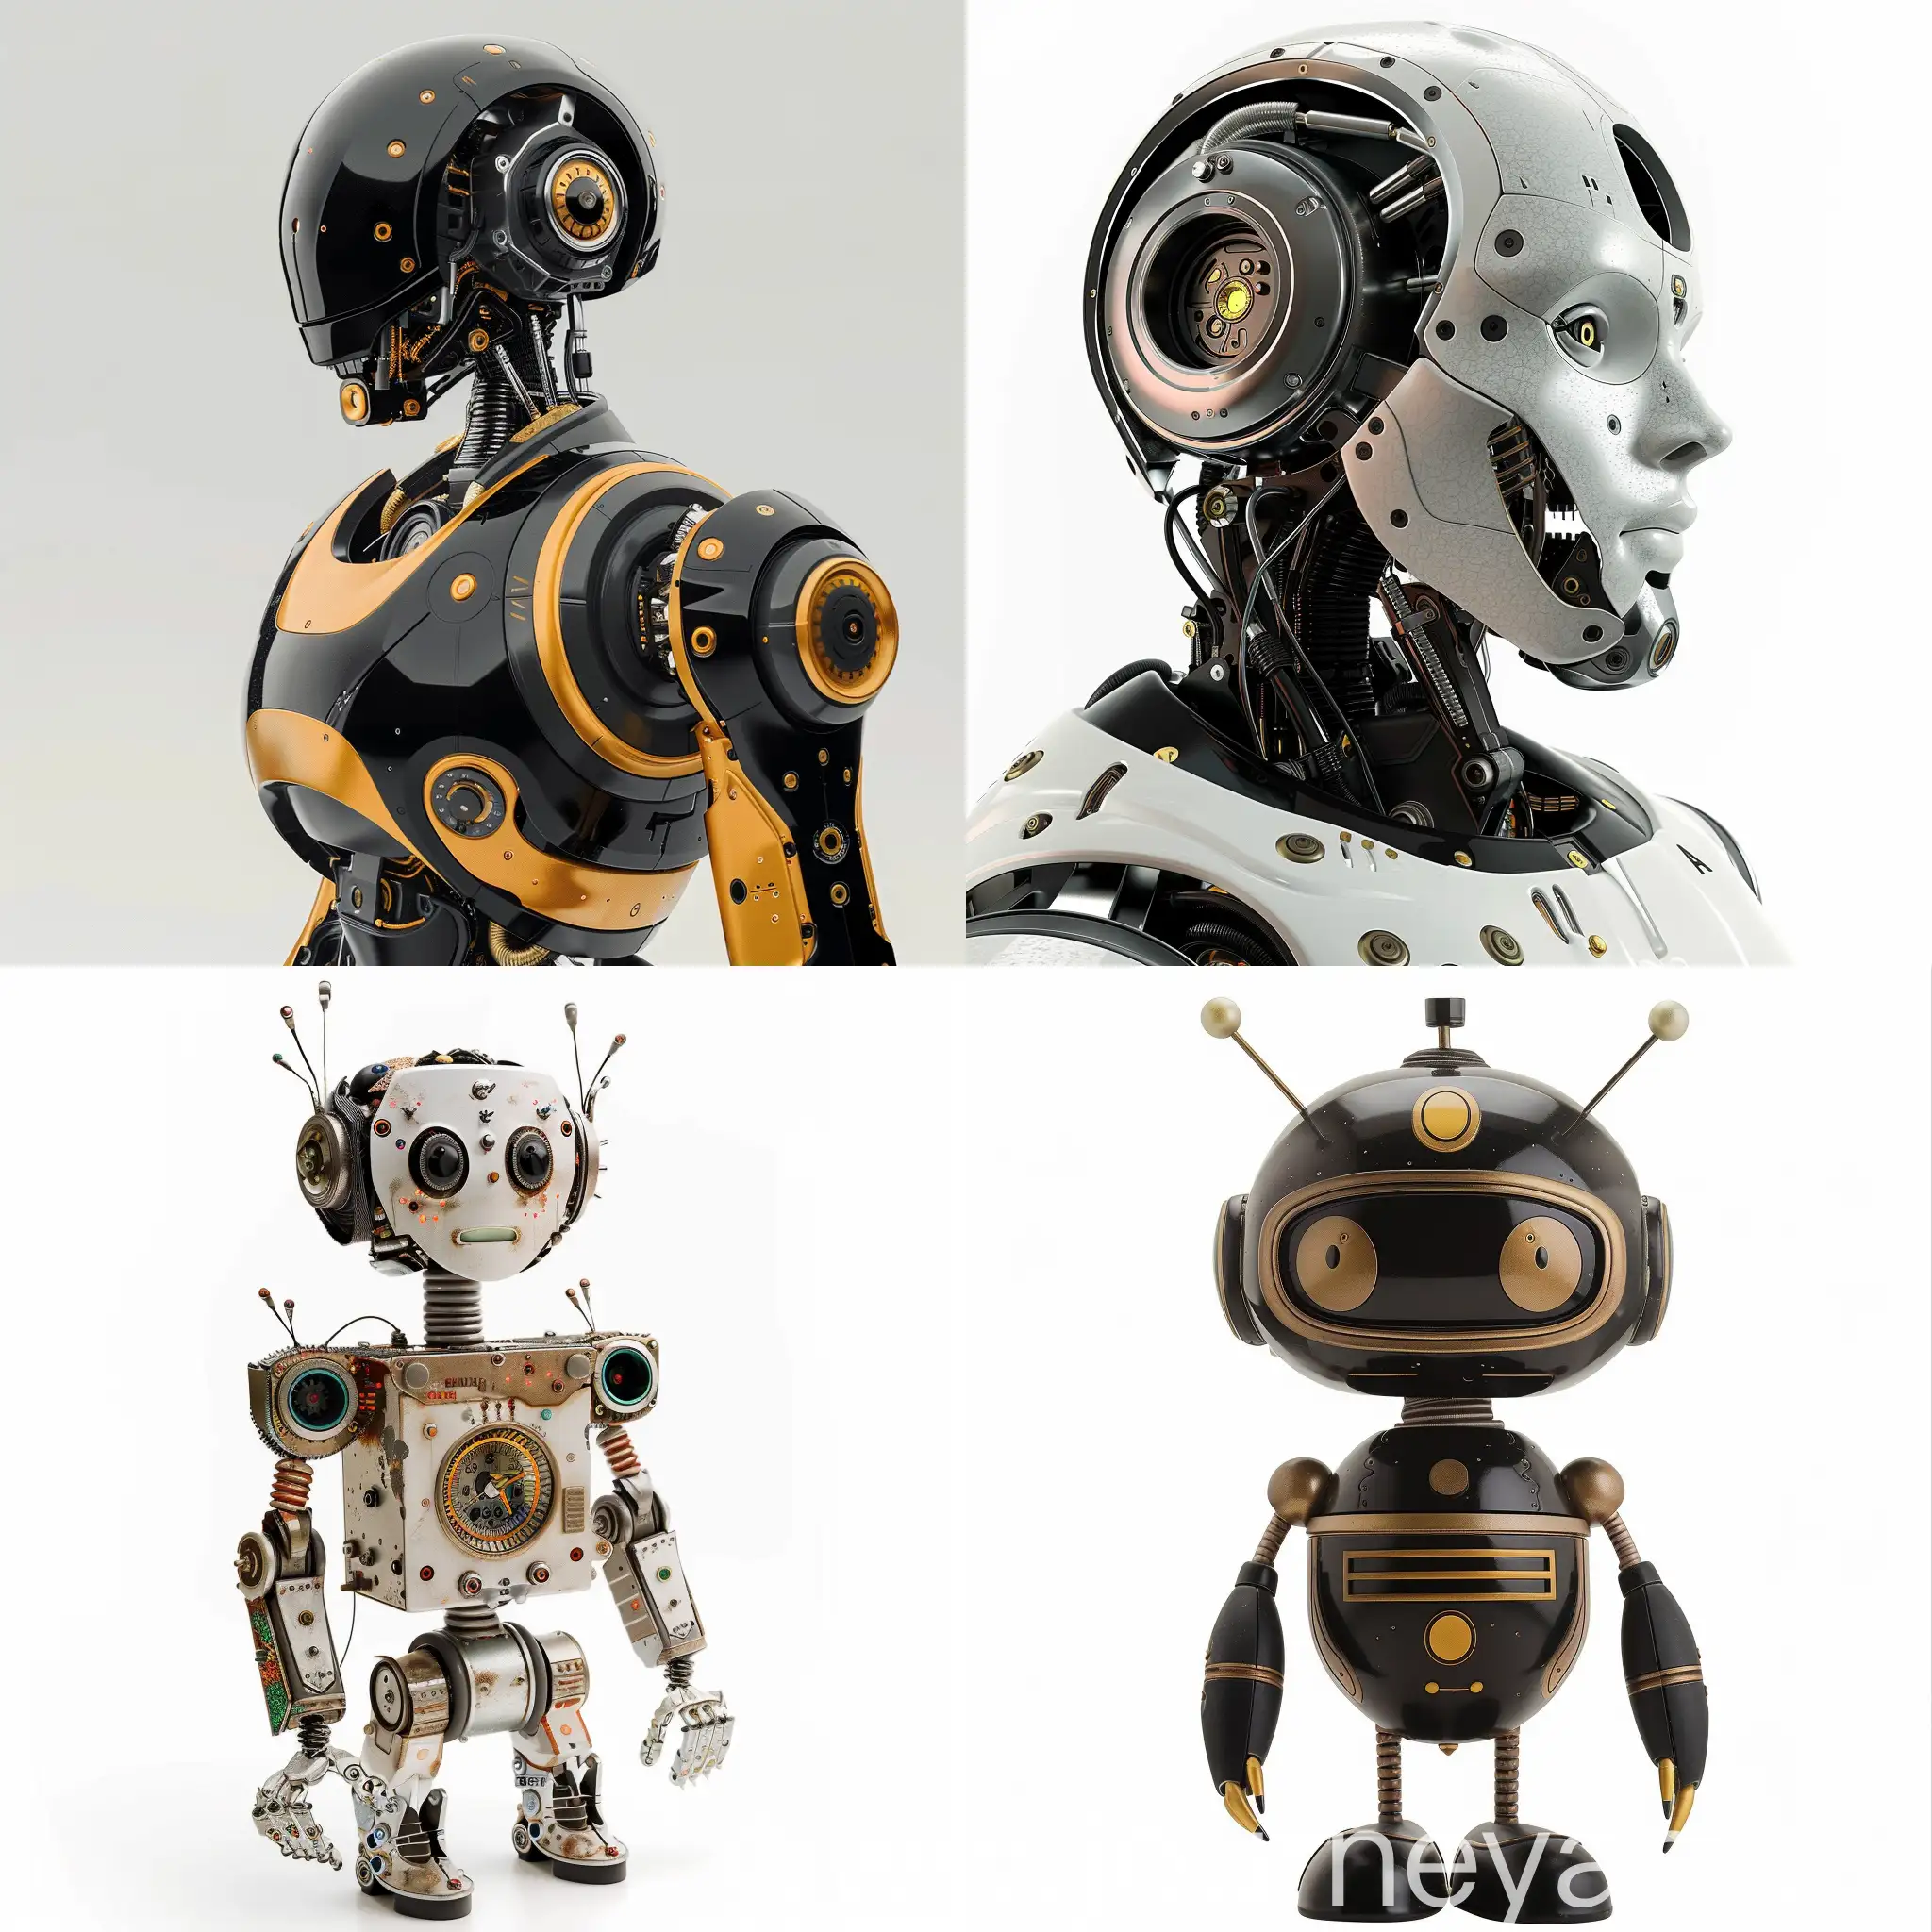 Futuristic-Robot-with-Angular-Design